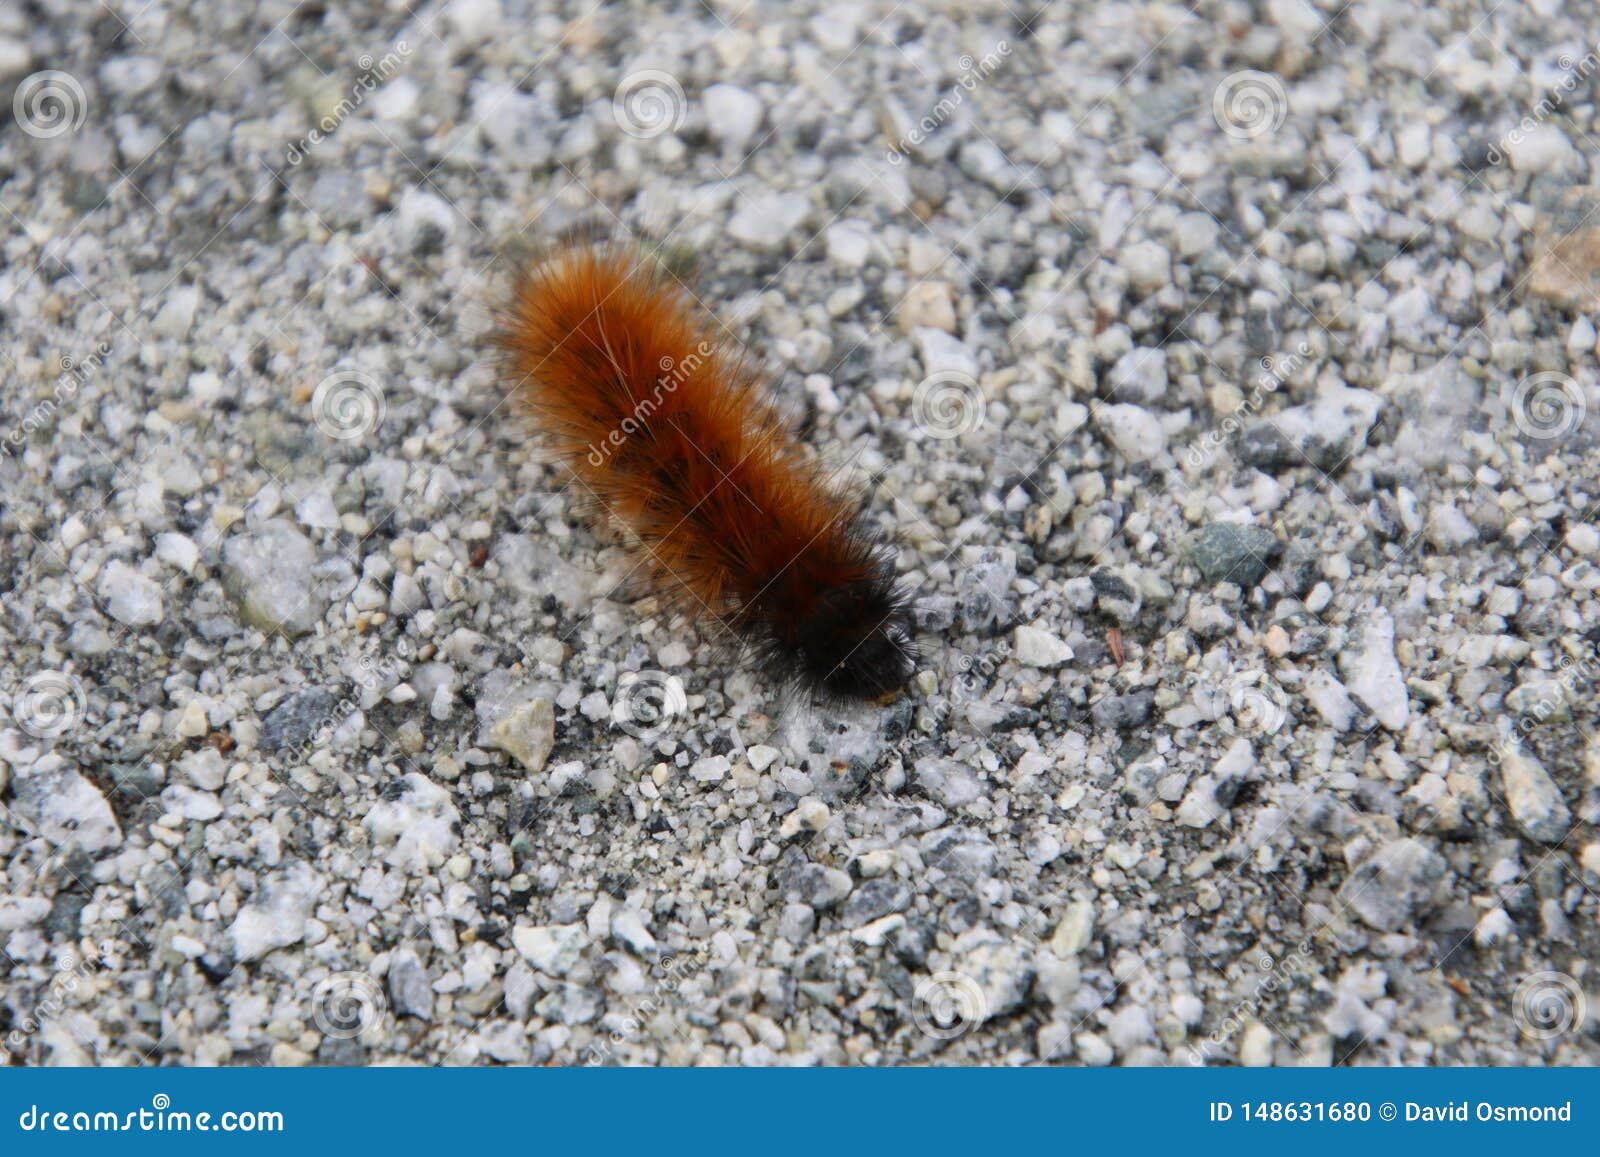 A Closeup Of An Orange And Black Fuzzy Caterpillar Stock Photo Image Of Nature Natural